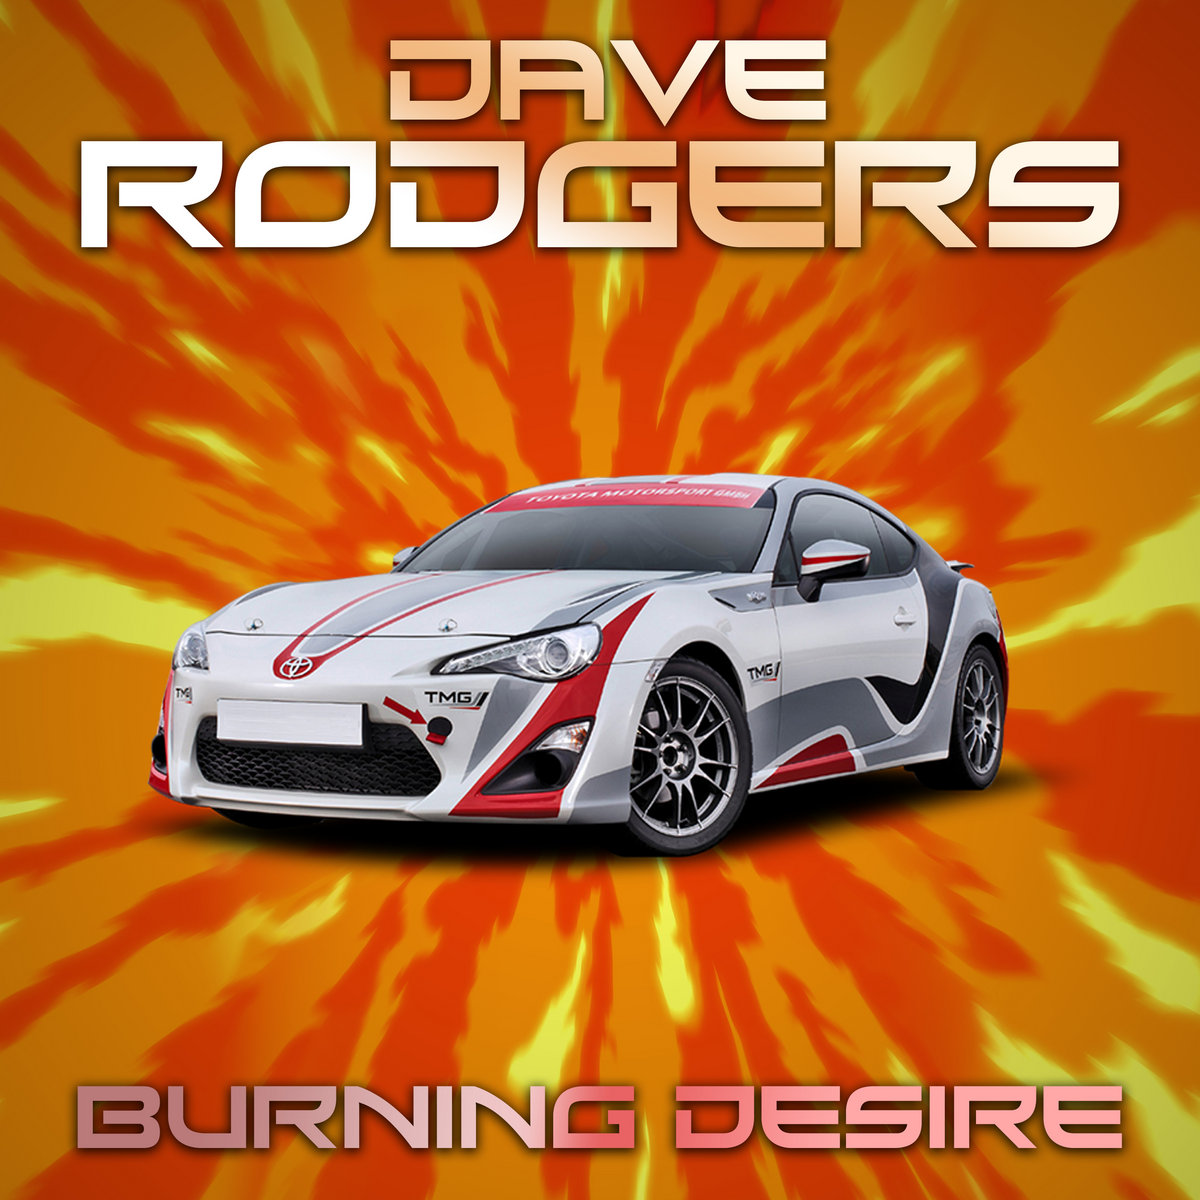 Dave rodgers deja vu. Burning by Desire. Dav Desire forum.